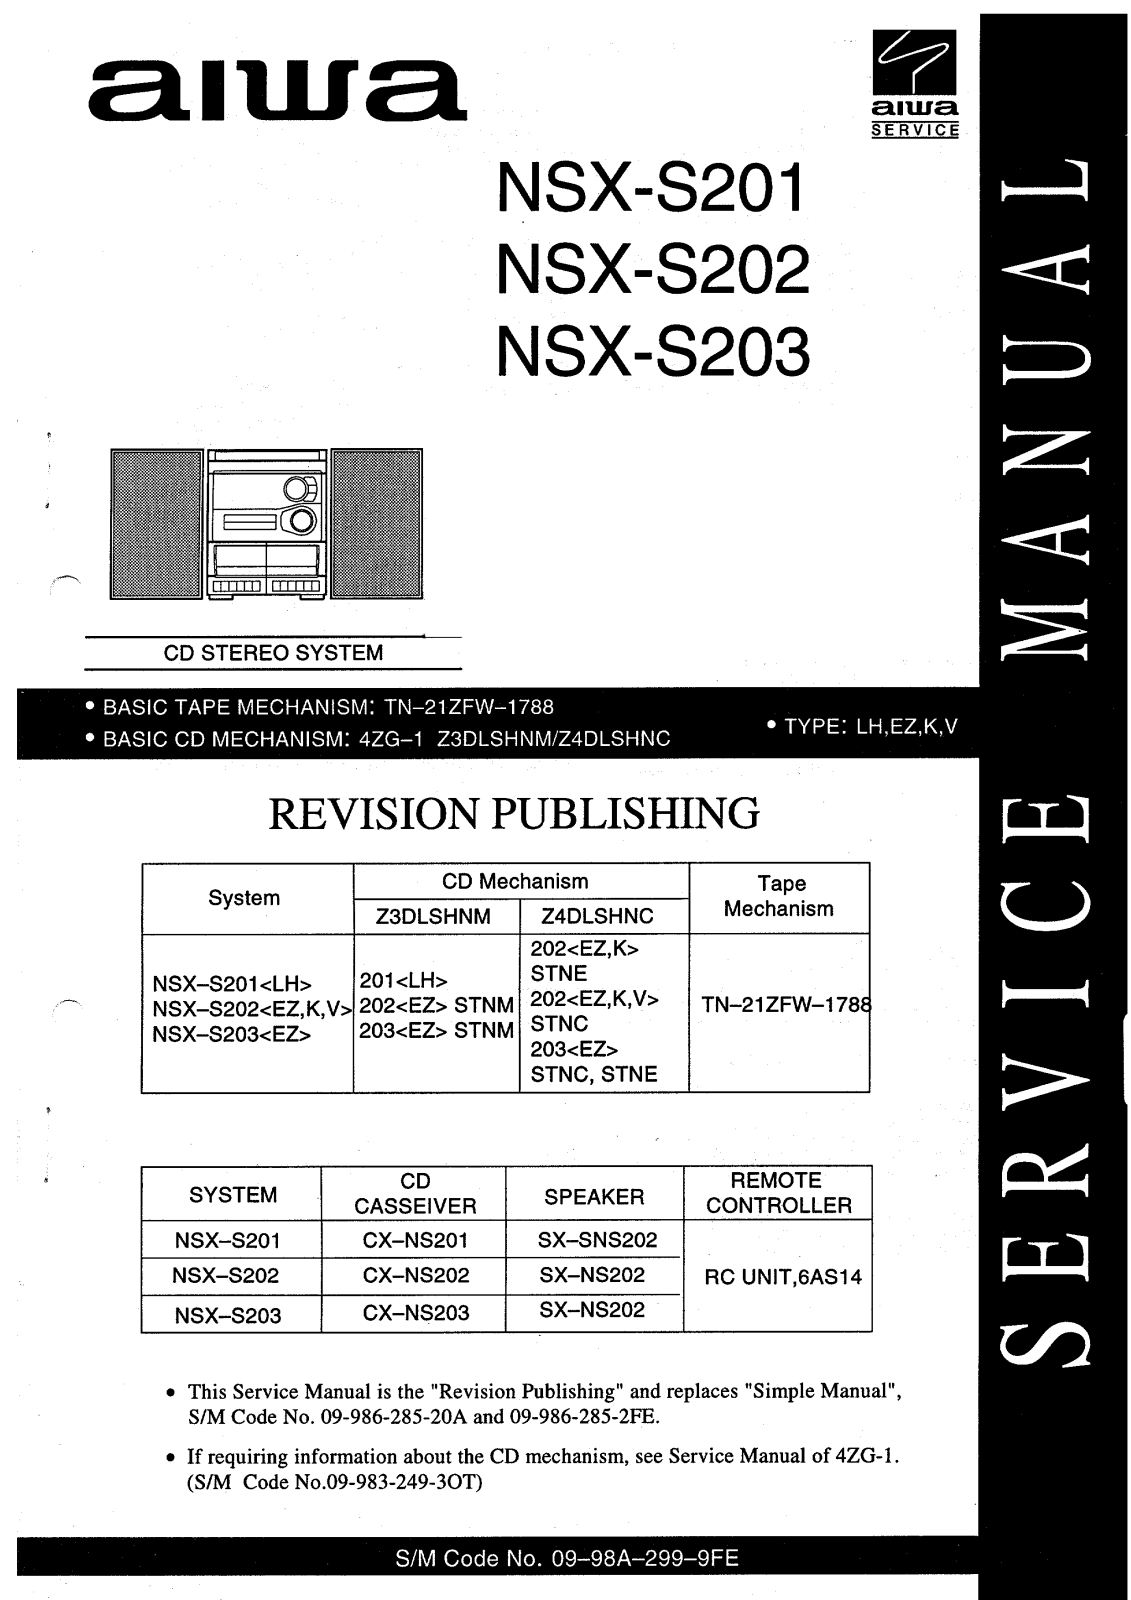 Aiwa NSX-S201, NSX-S202, NSX-S203 Service Manual